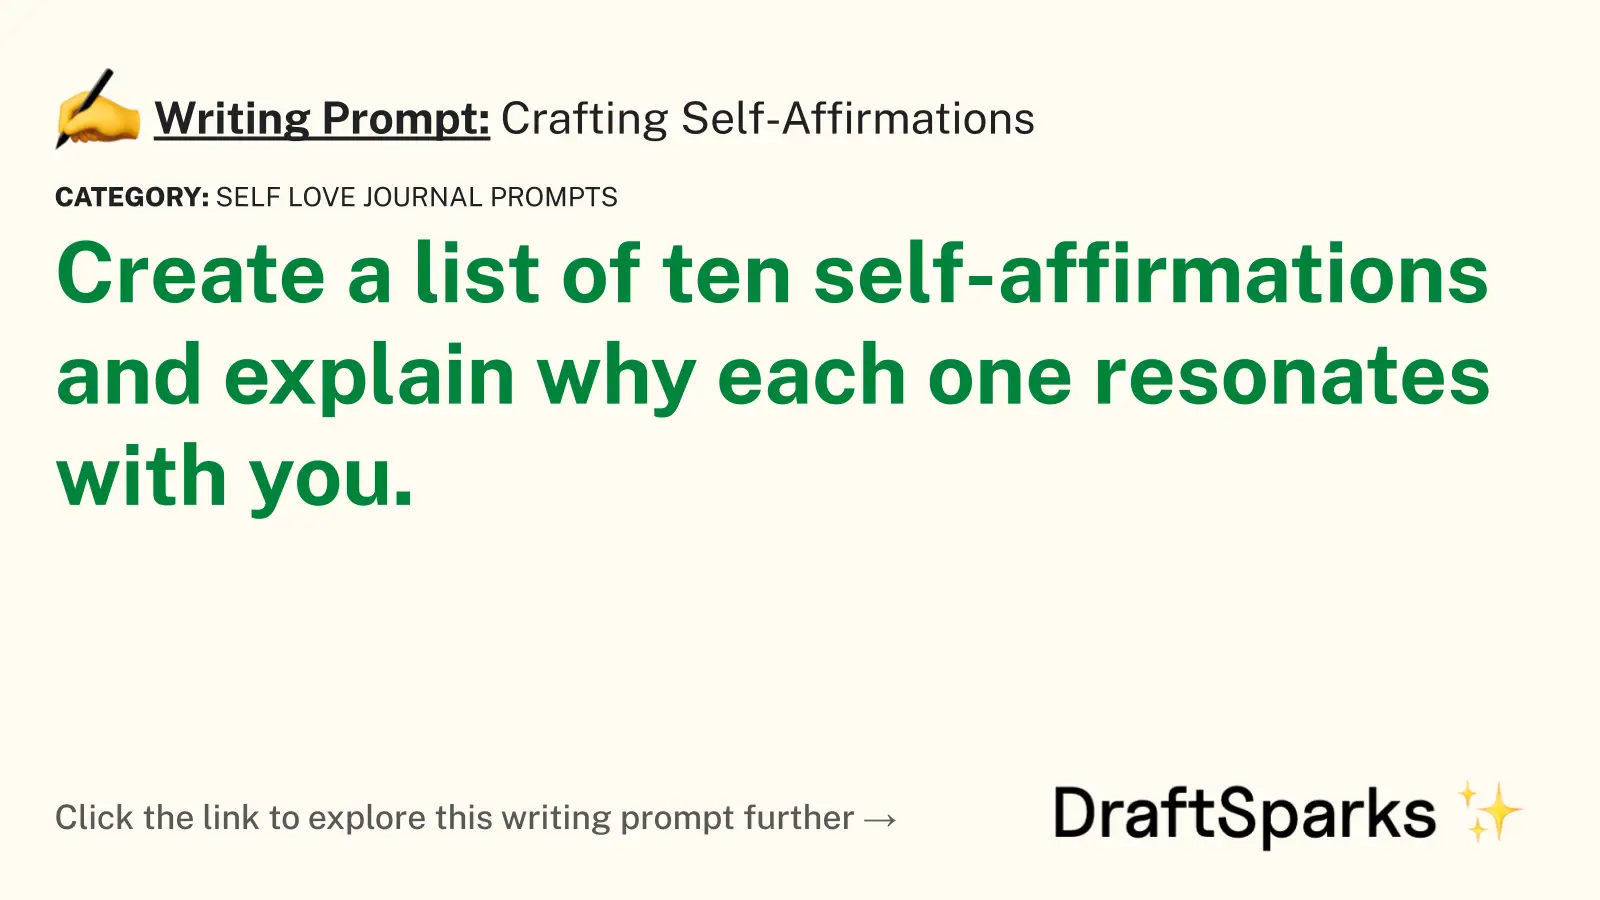 Crafting Self-Affirmations